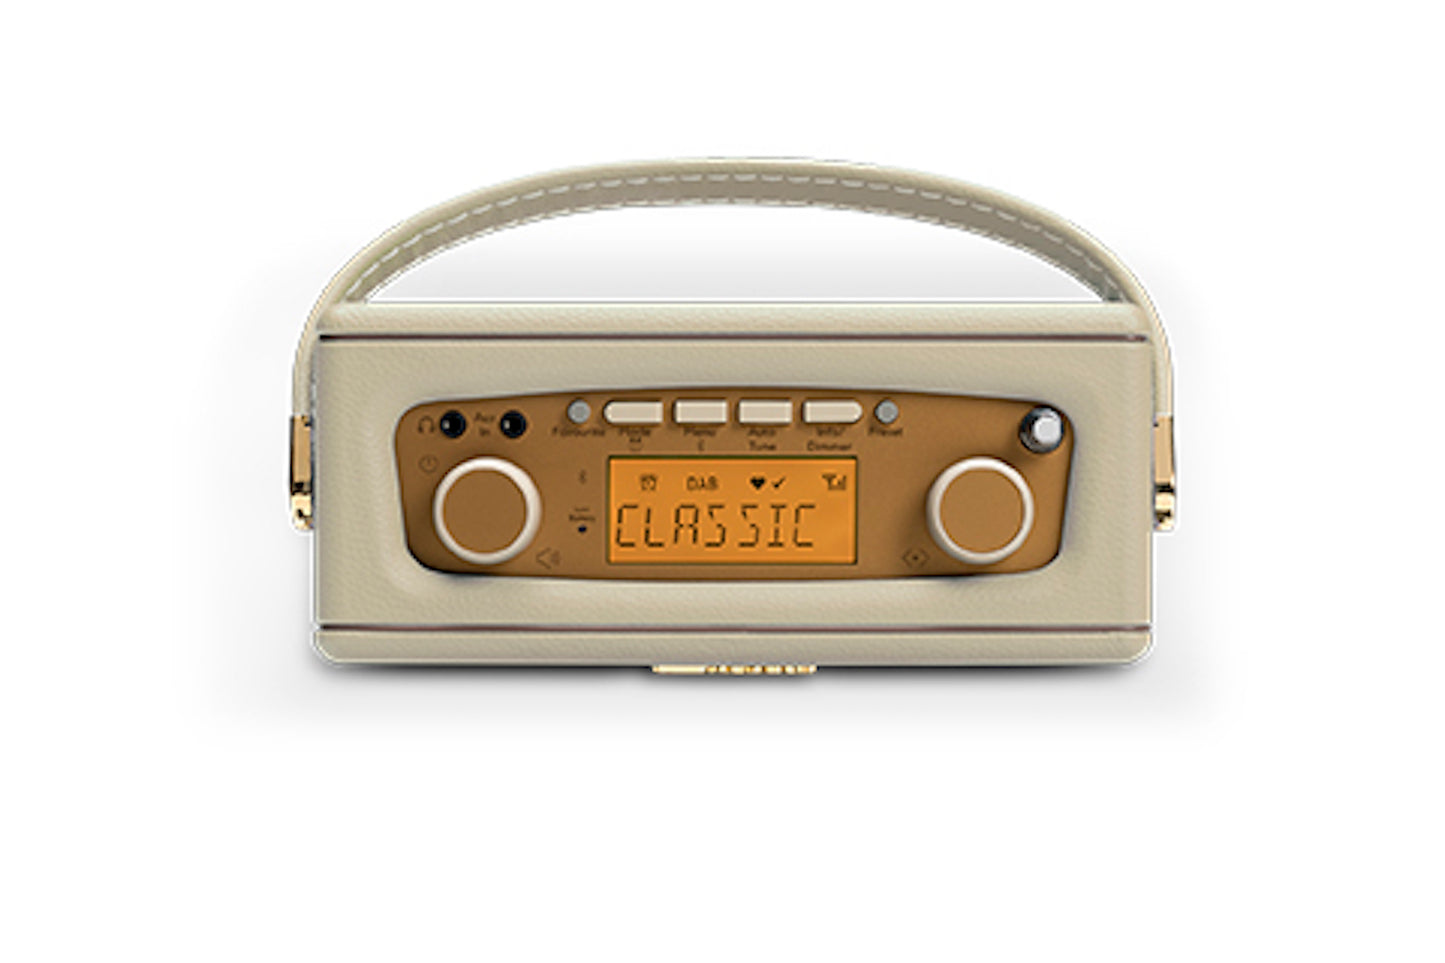 Revival Uno BT | pastel cream | tragbares DAB+/FM Radio mit Bluetooth